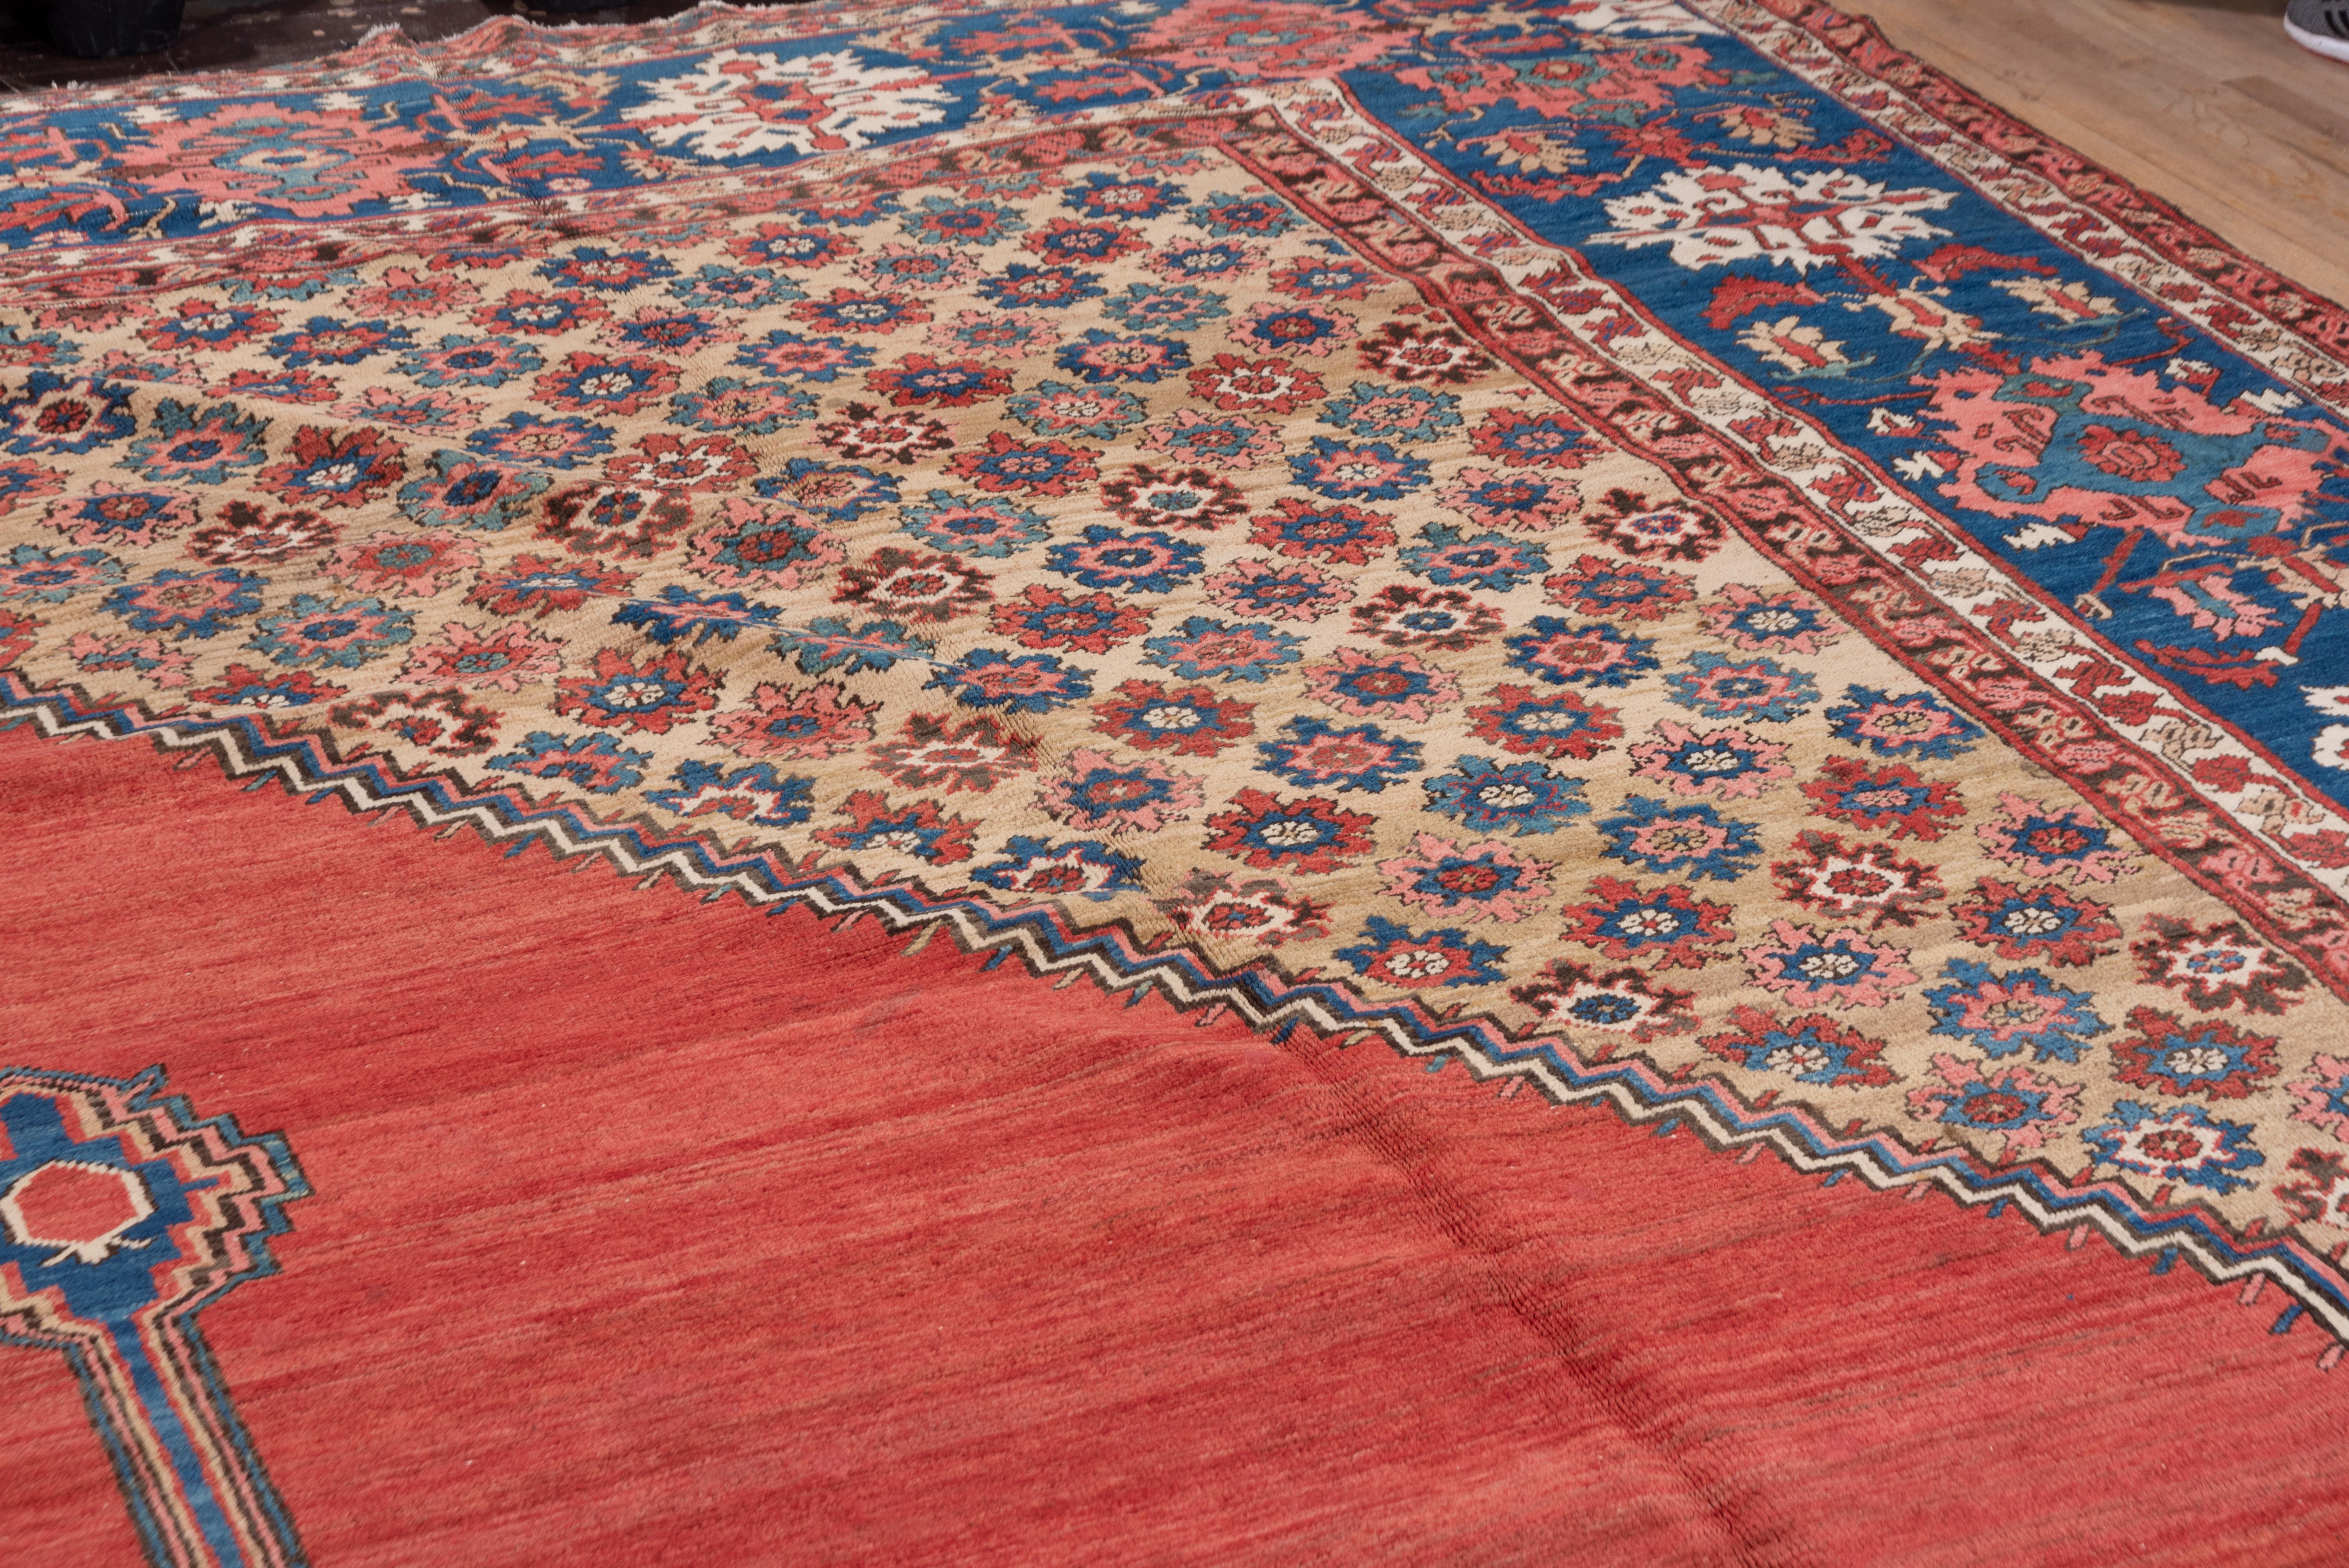 Wool Rare Fine Antique Persian Serapi Mansion Carpet, Bright Colors, Blue Border